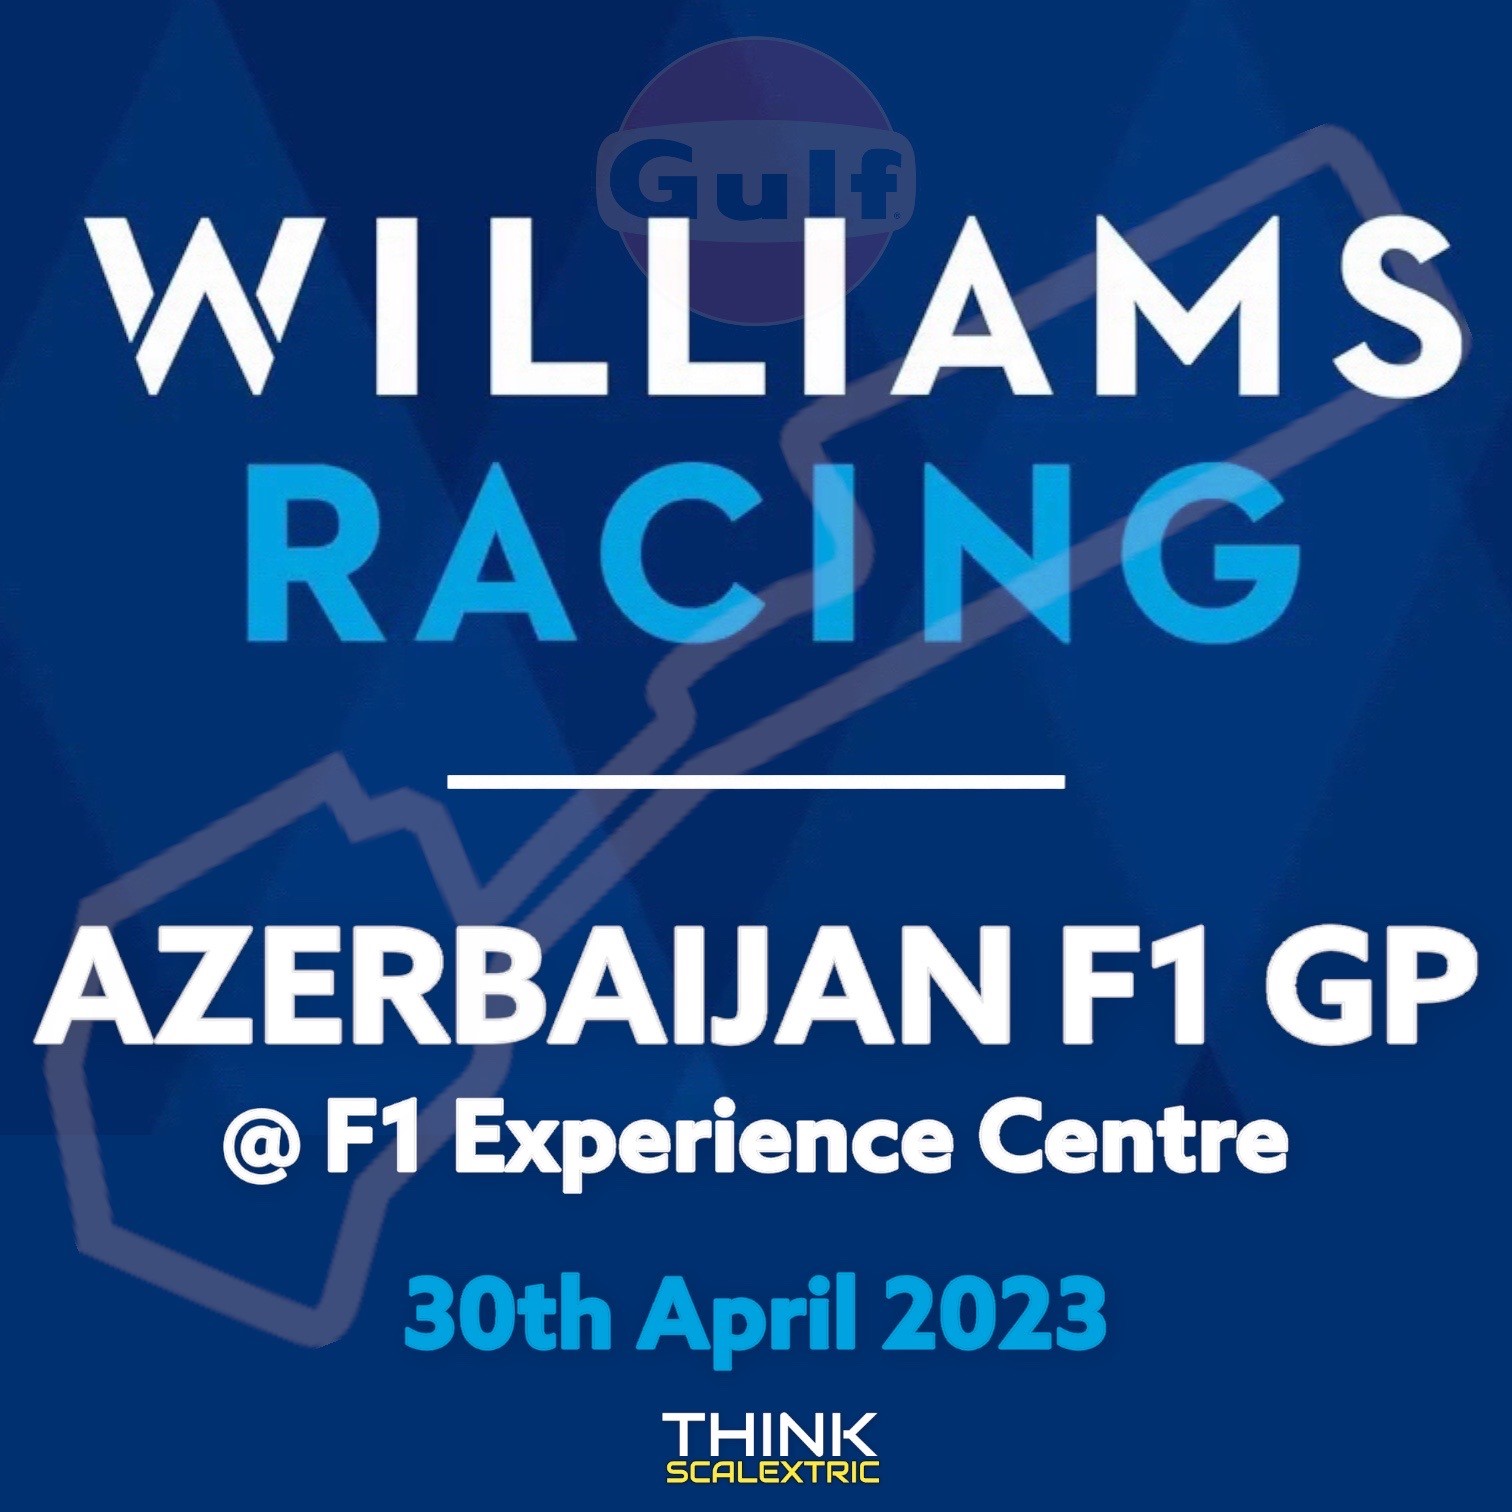 williams f1 racing race day hospitality azerbaijan f1 2023 gp